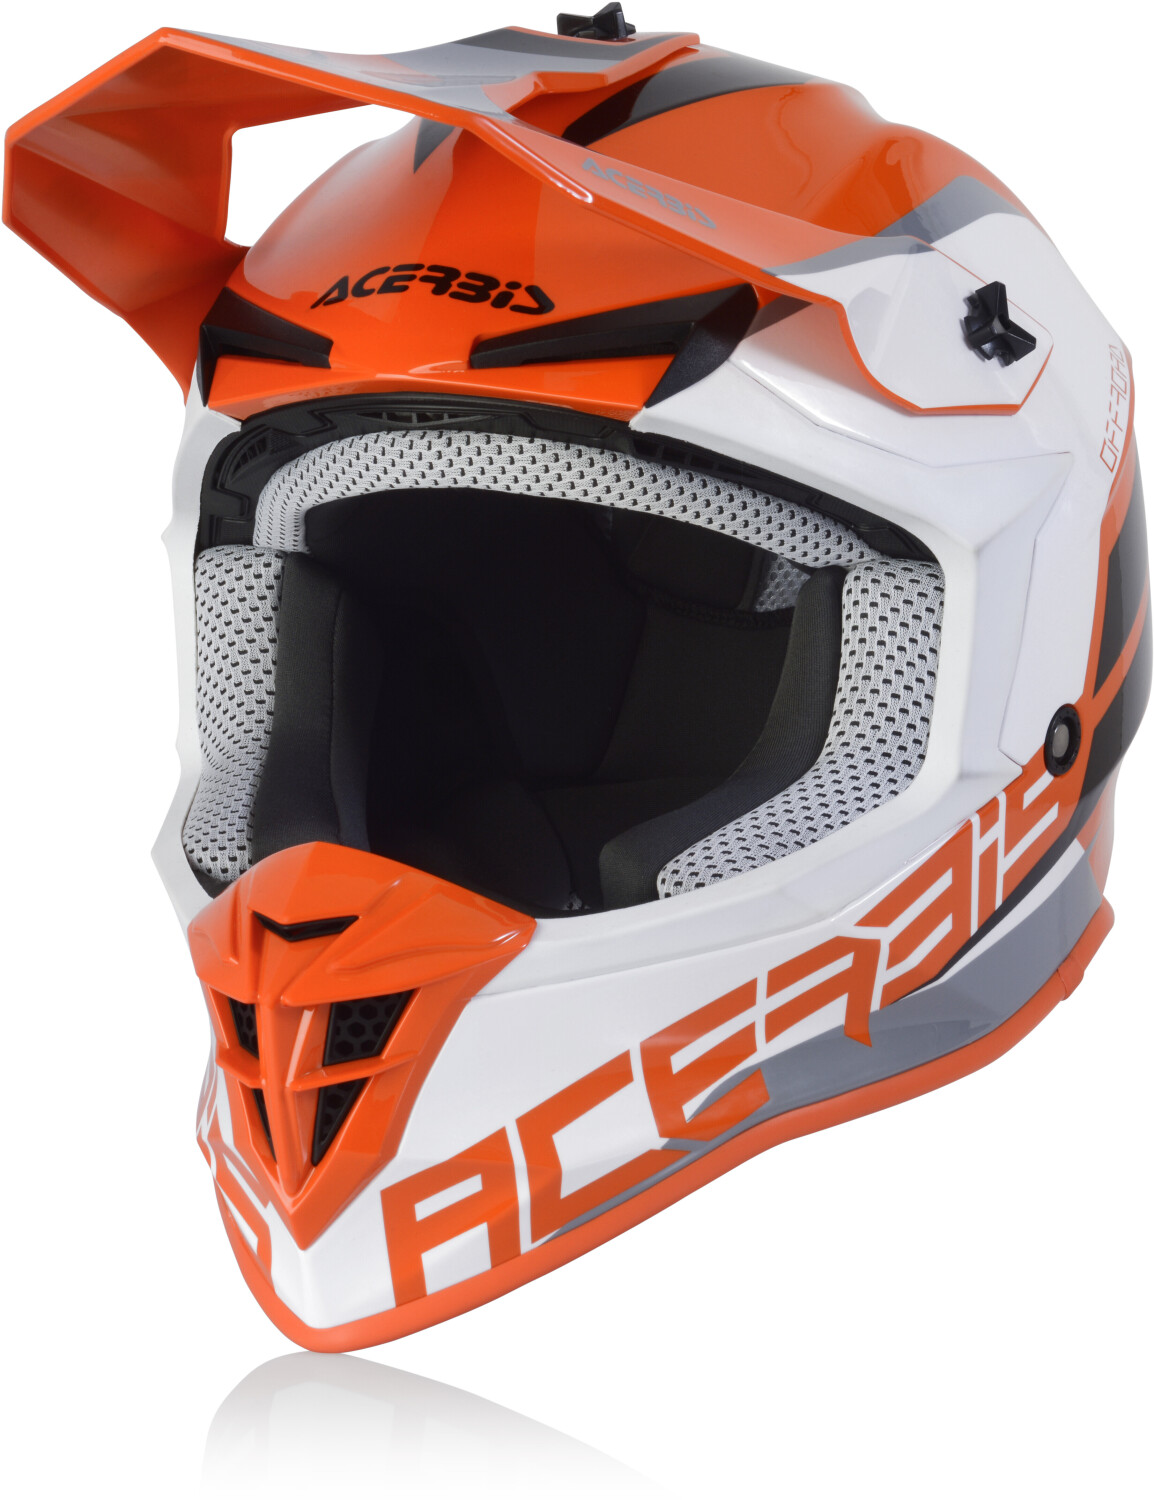 Photos - Motorcycle Helmet ACERBIS Linear orange/white 